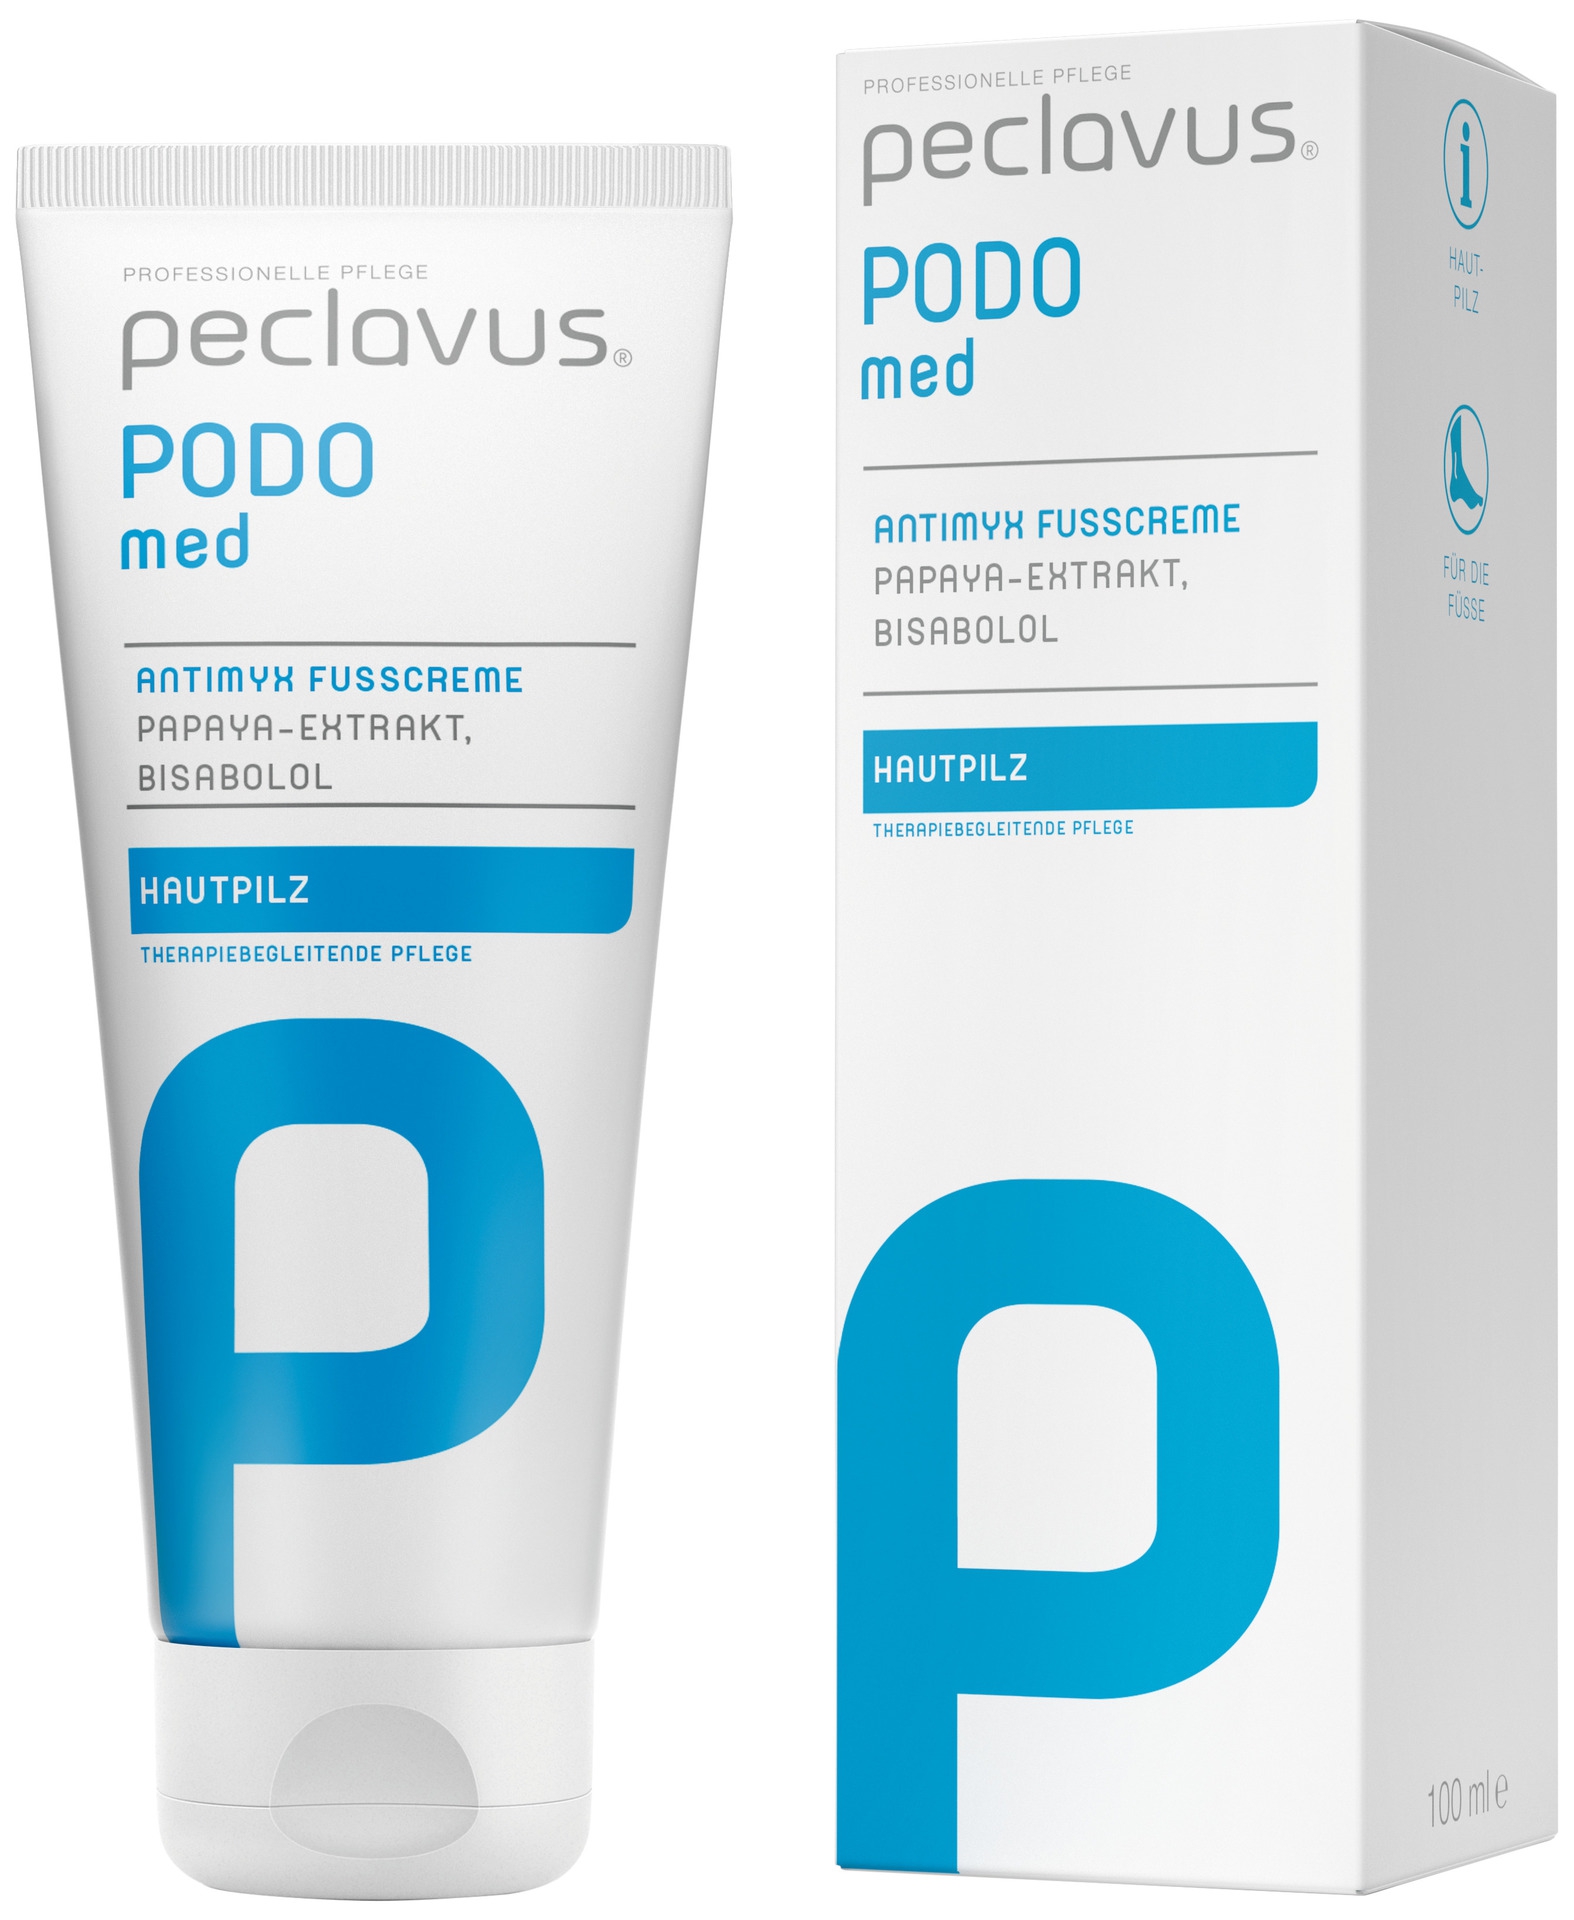 Peclavus PODOmed AntiMYX Fußcreme | 100 ml